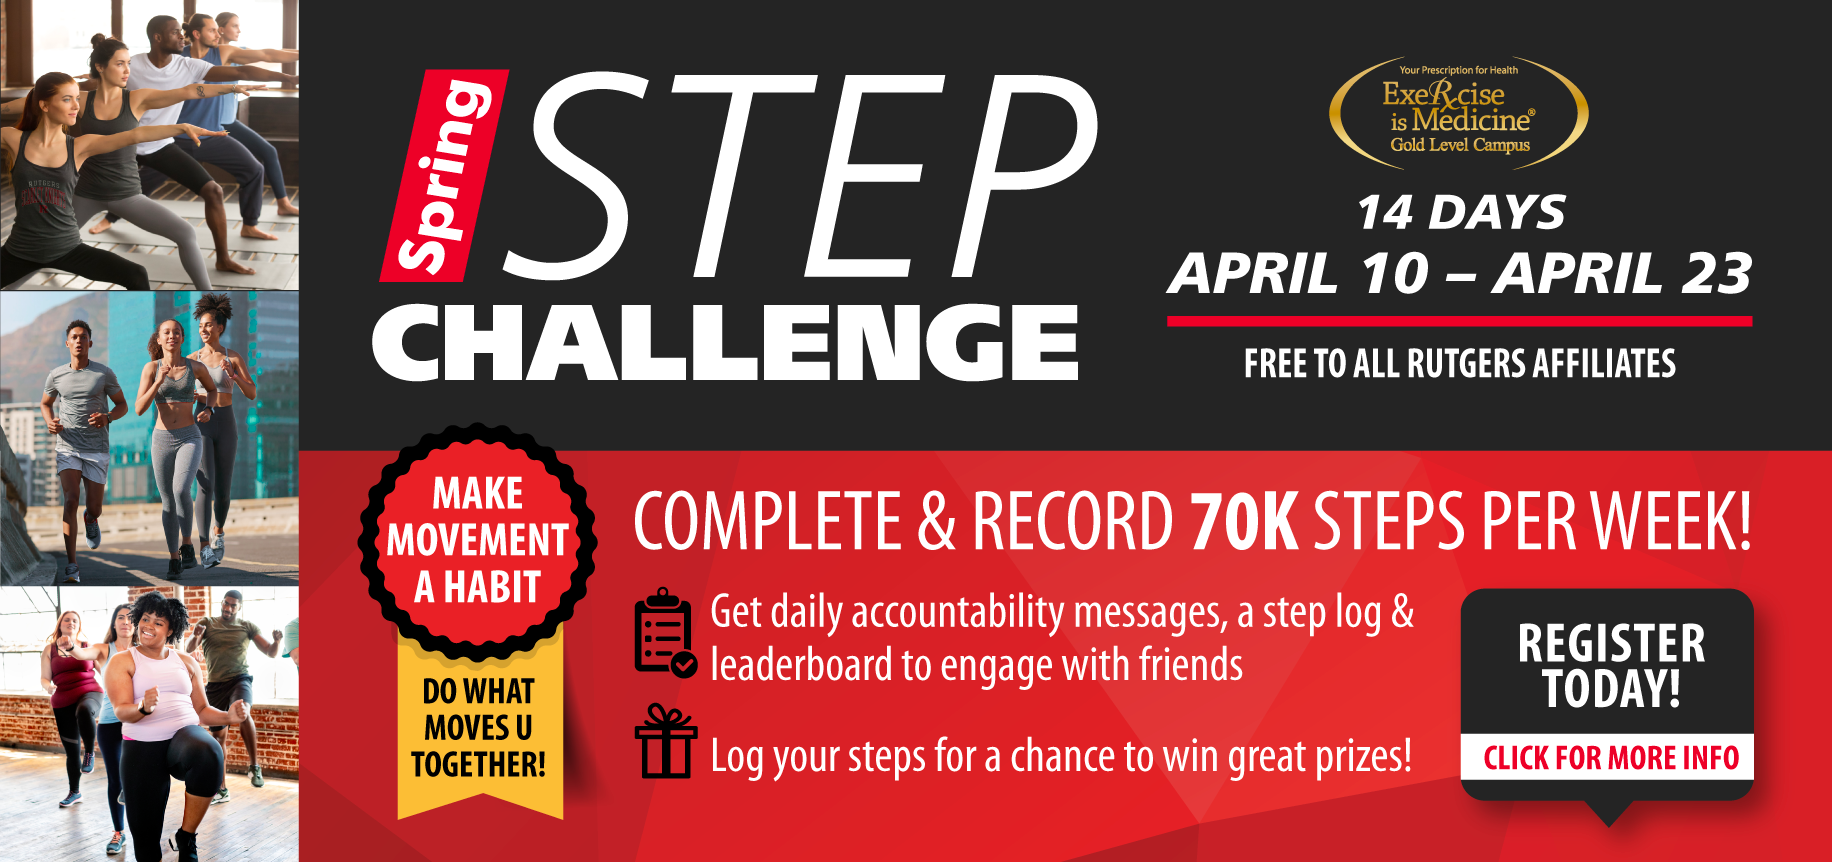 Rec_P0348_Spring-Step-Challenge_Web-Banner_23S